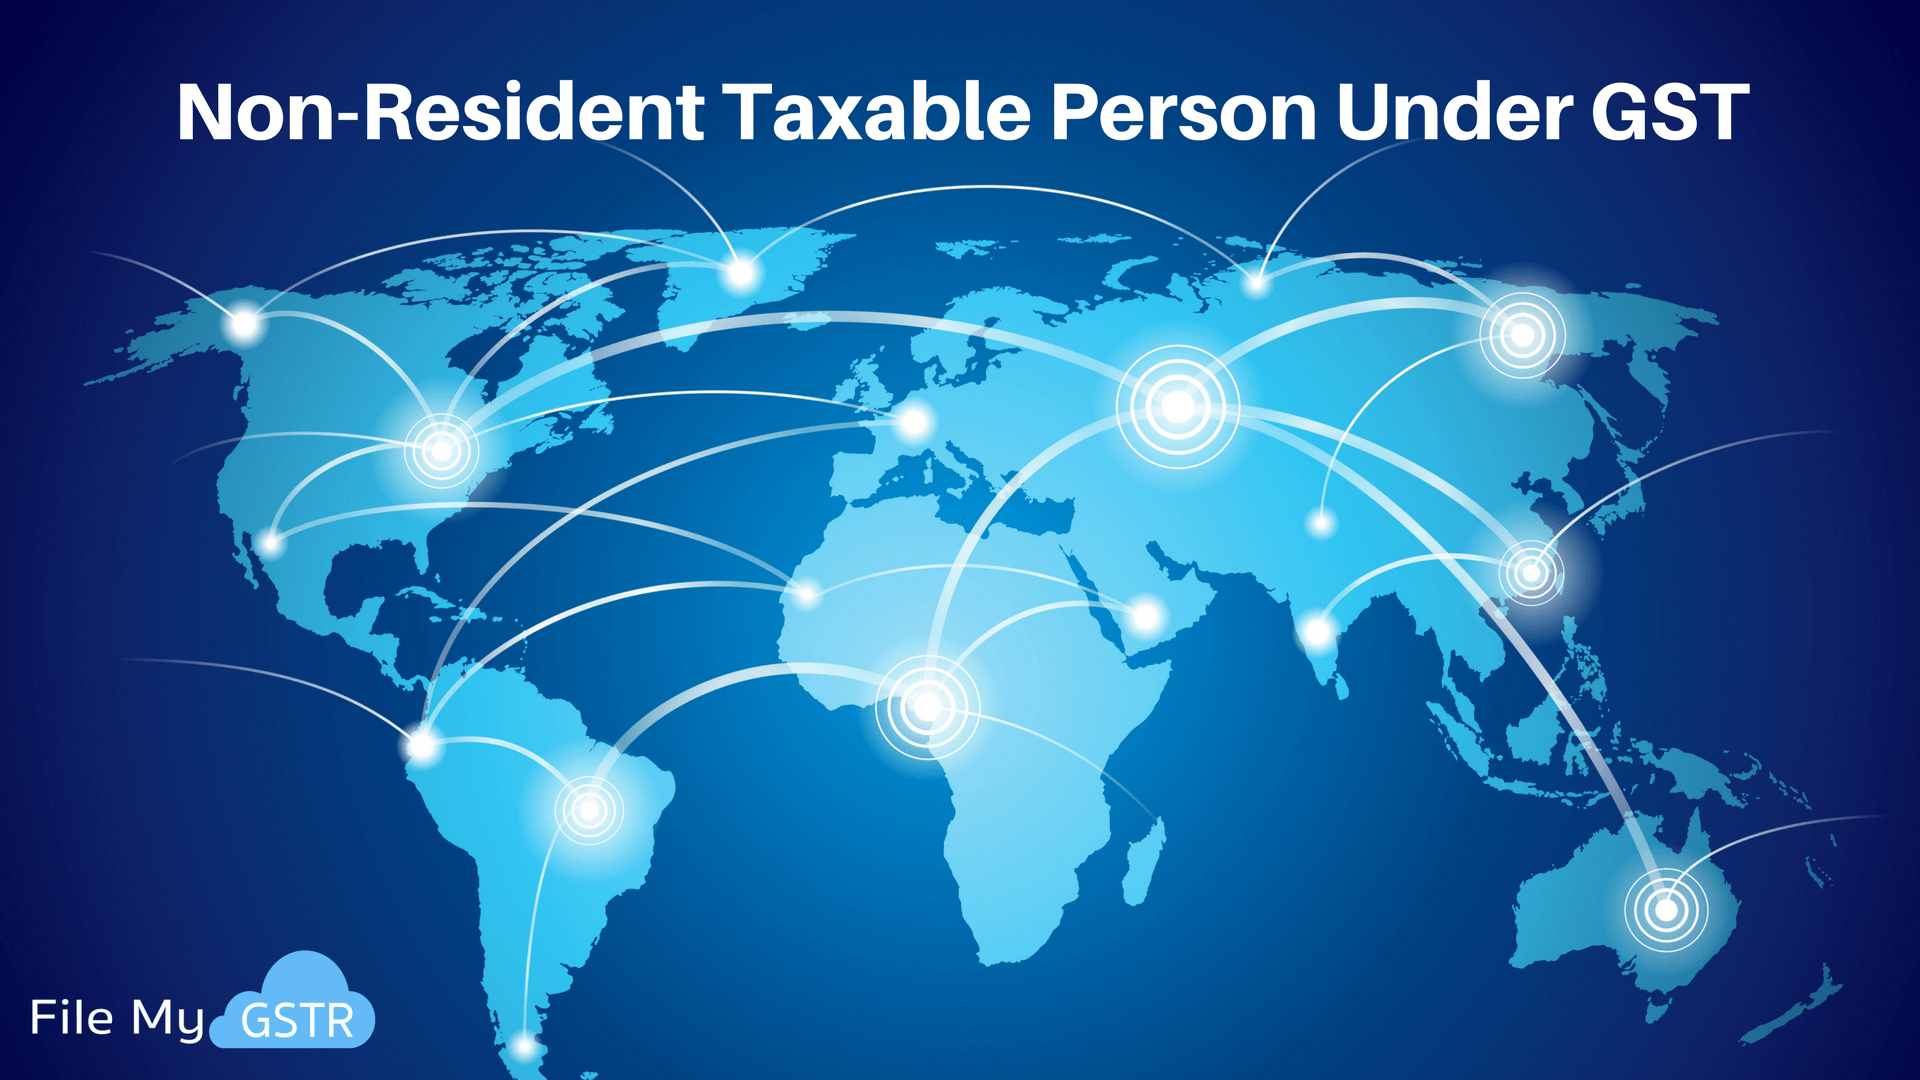 Non-Resident Taxable Person Under GST